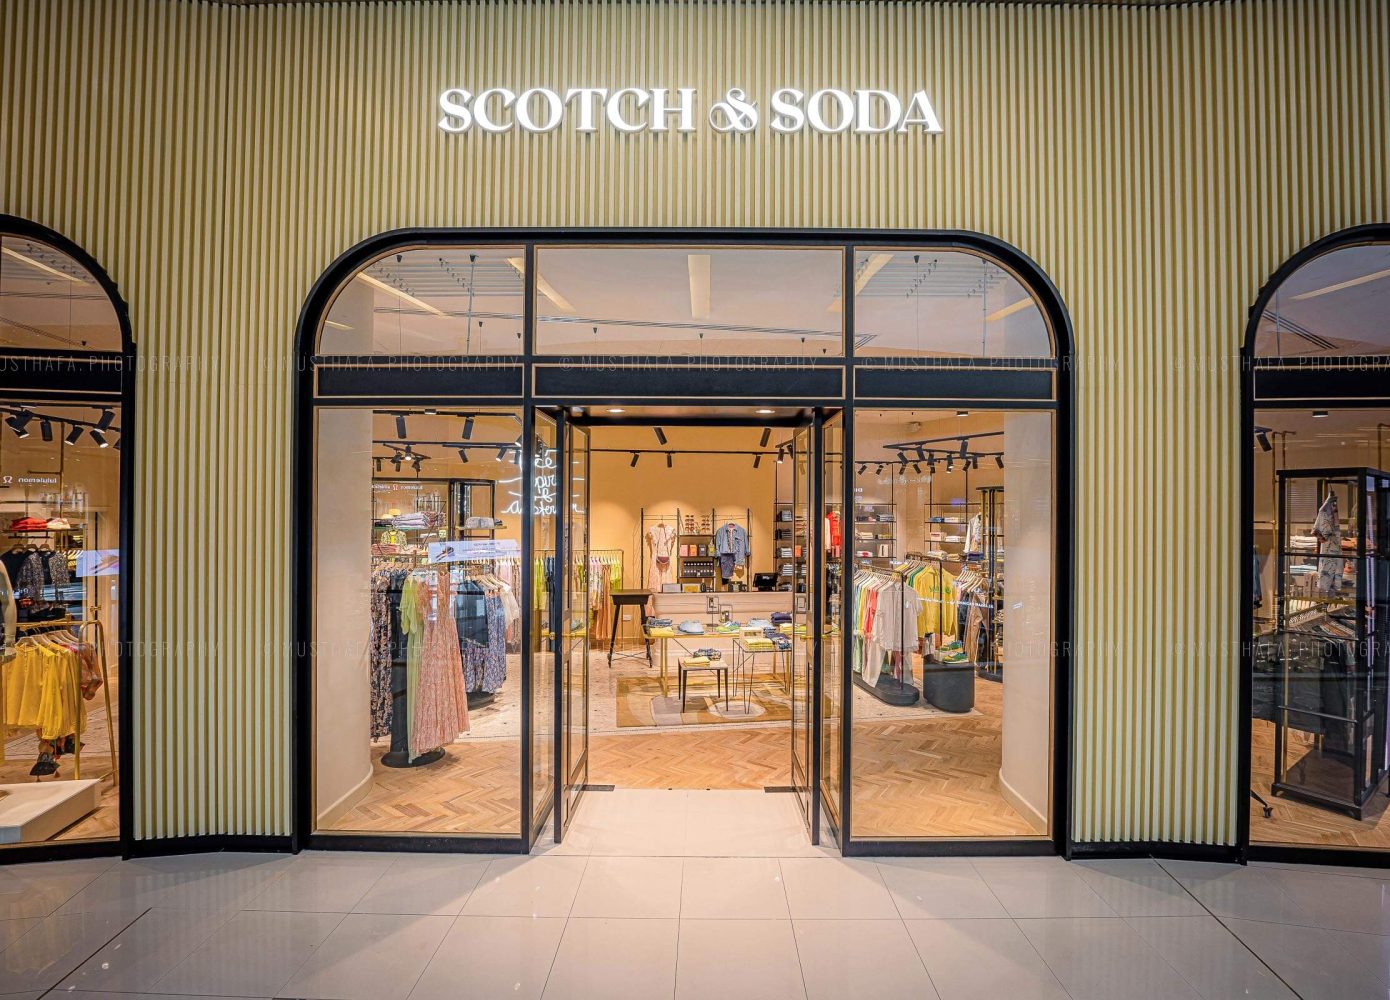 Scotch Soda Dubai Marina Mall Beside Store Retail Interior Photographer Luxury Brands Professional Freelance Abu Dhabi UAE Kuwait KSA Riyadh 02